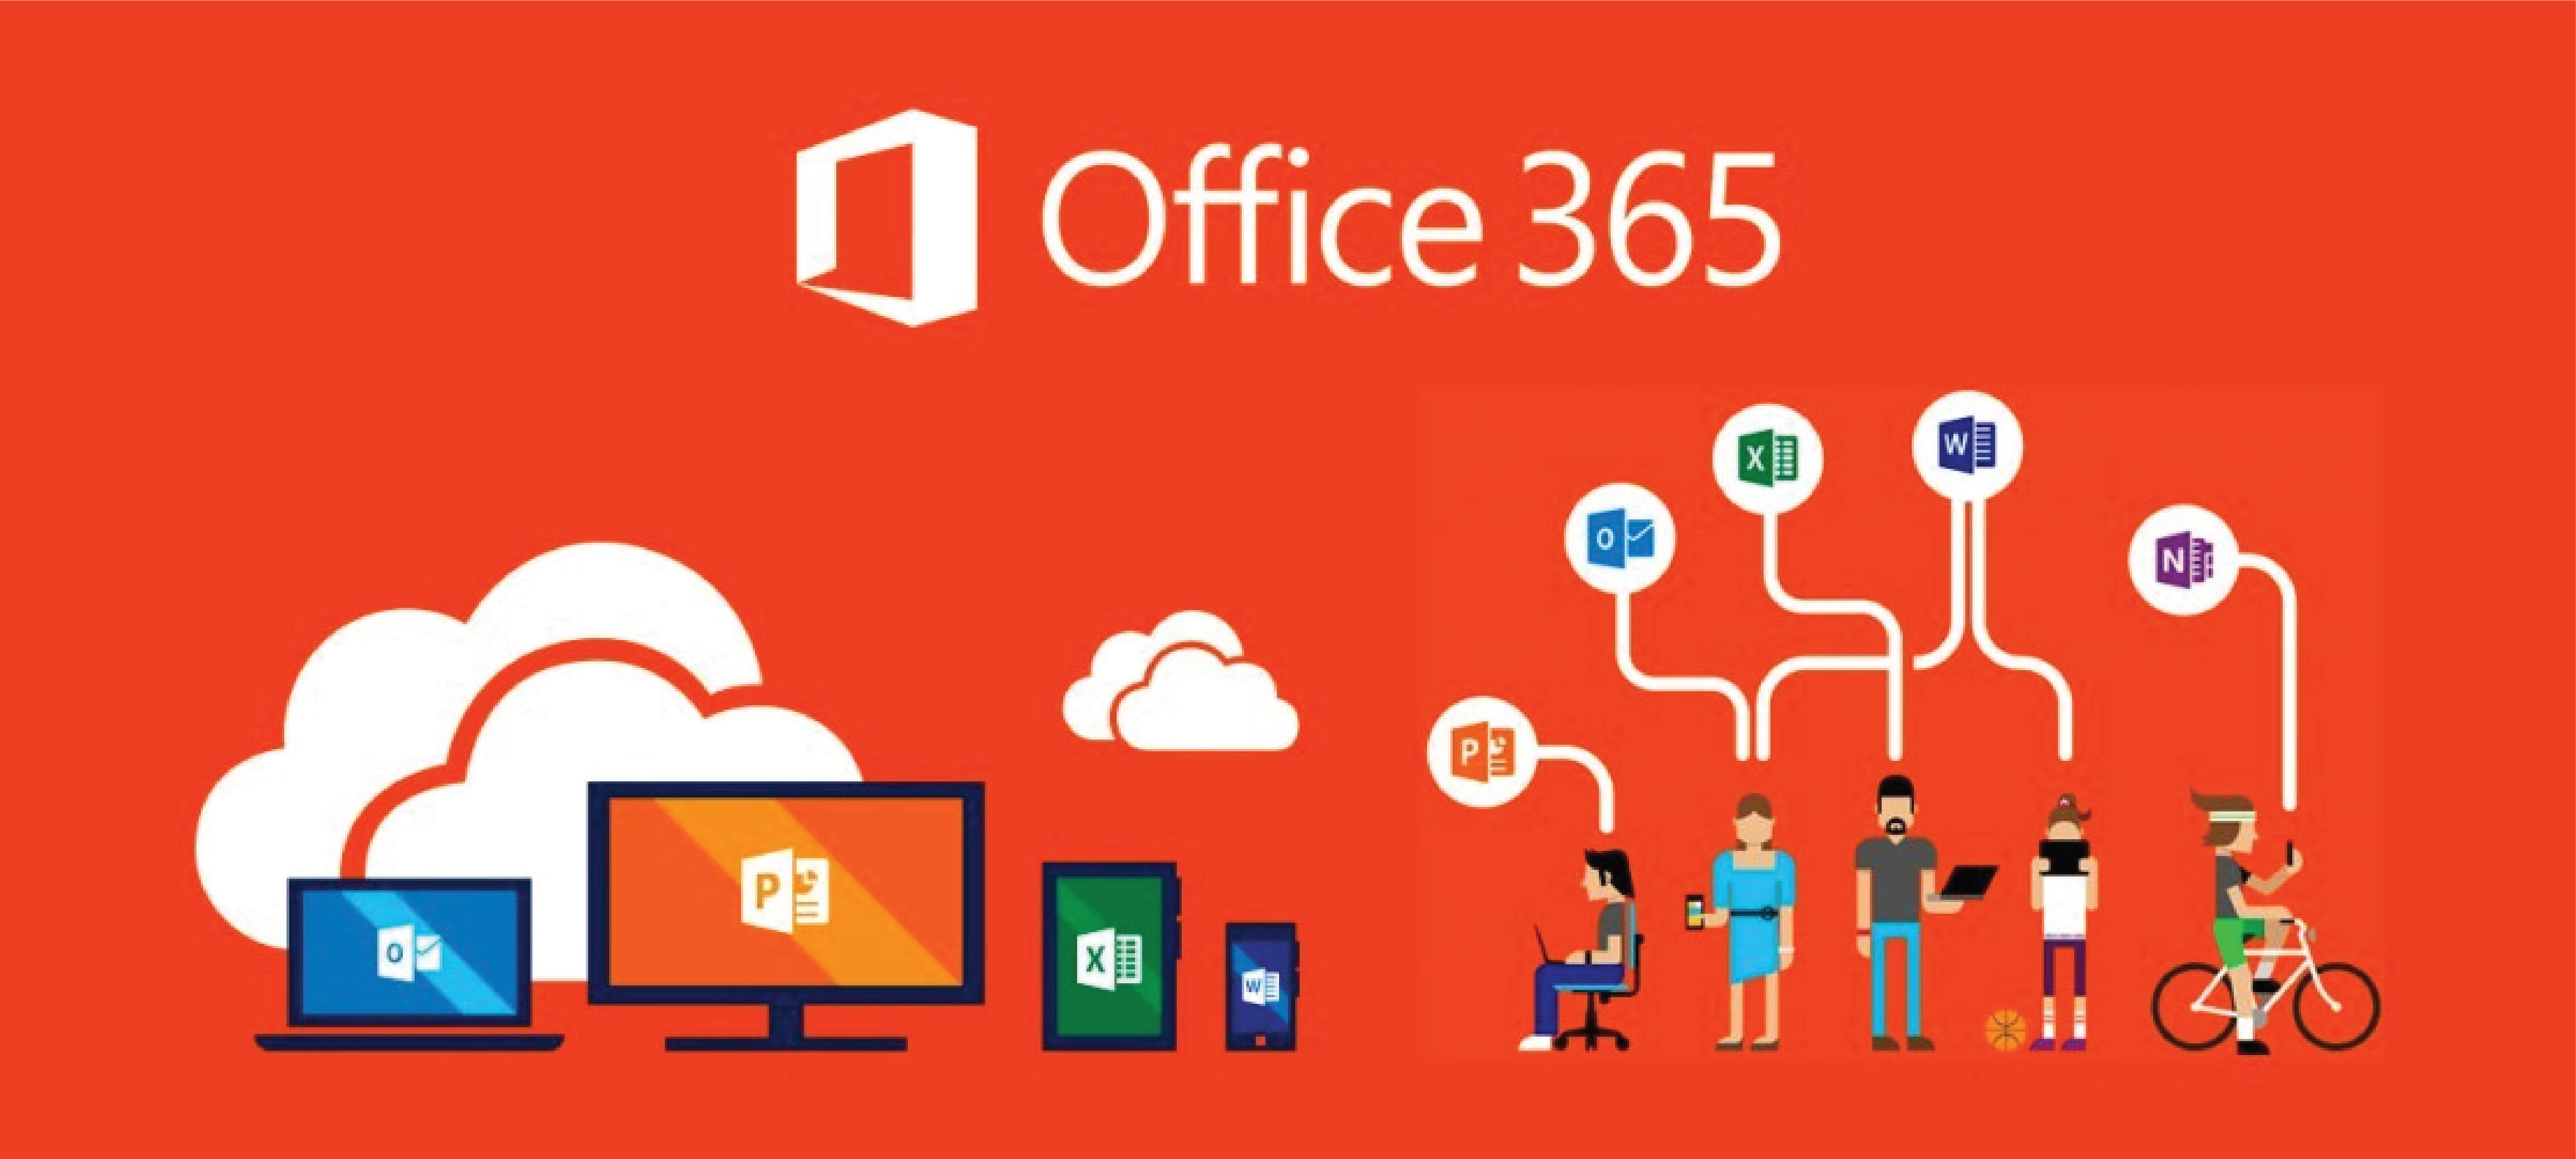 "Office 365"